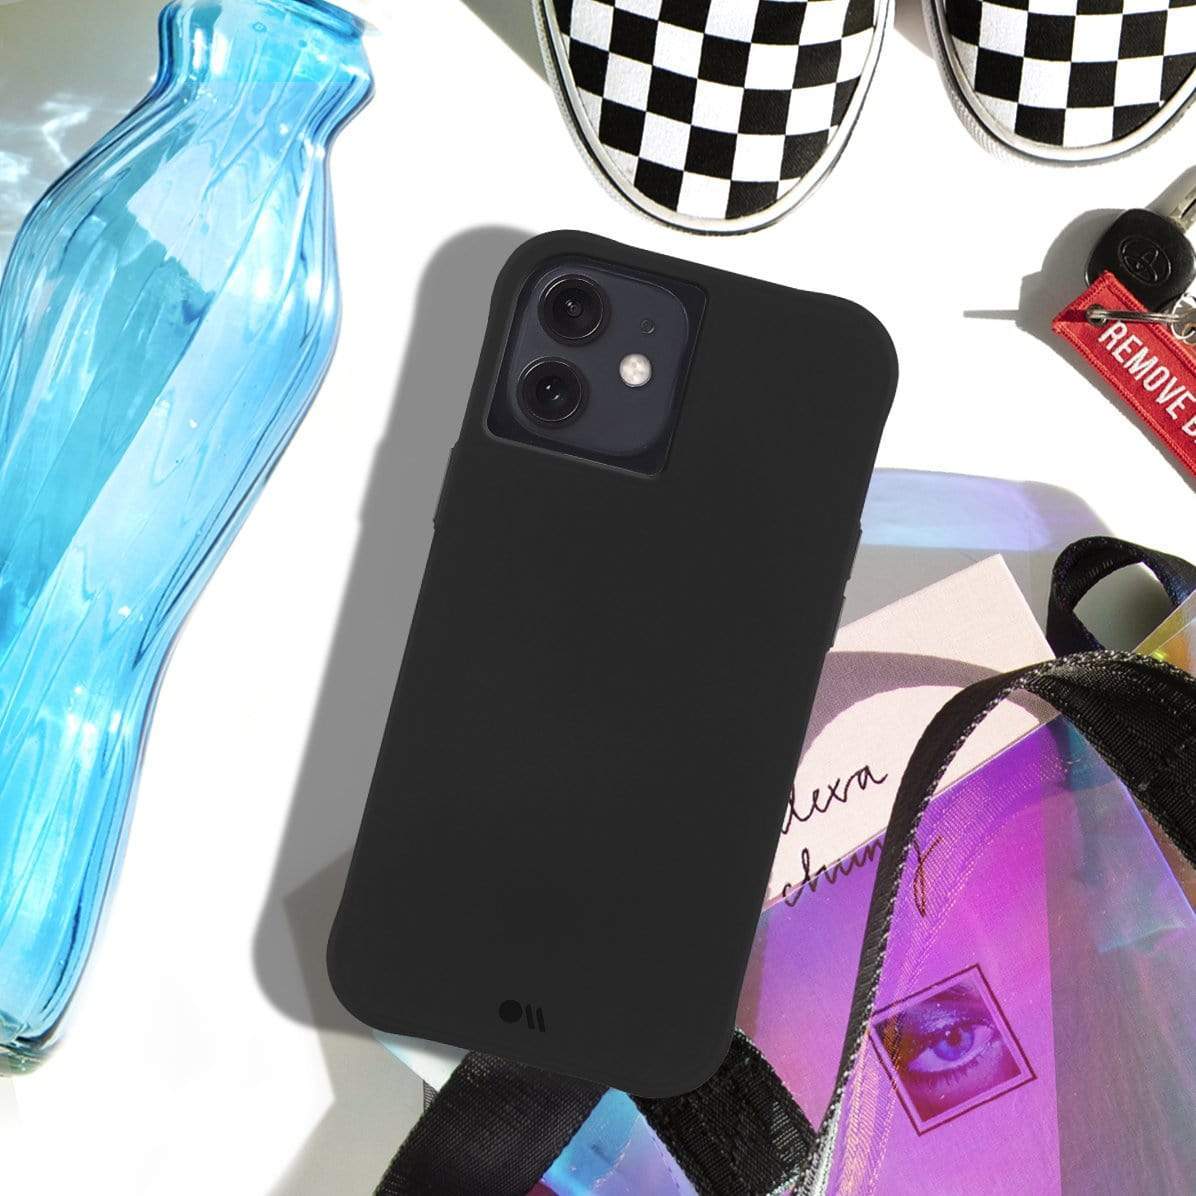 Tough Black case spread out with accessories. color::Black